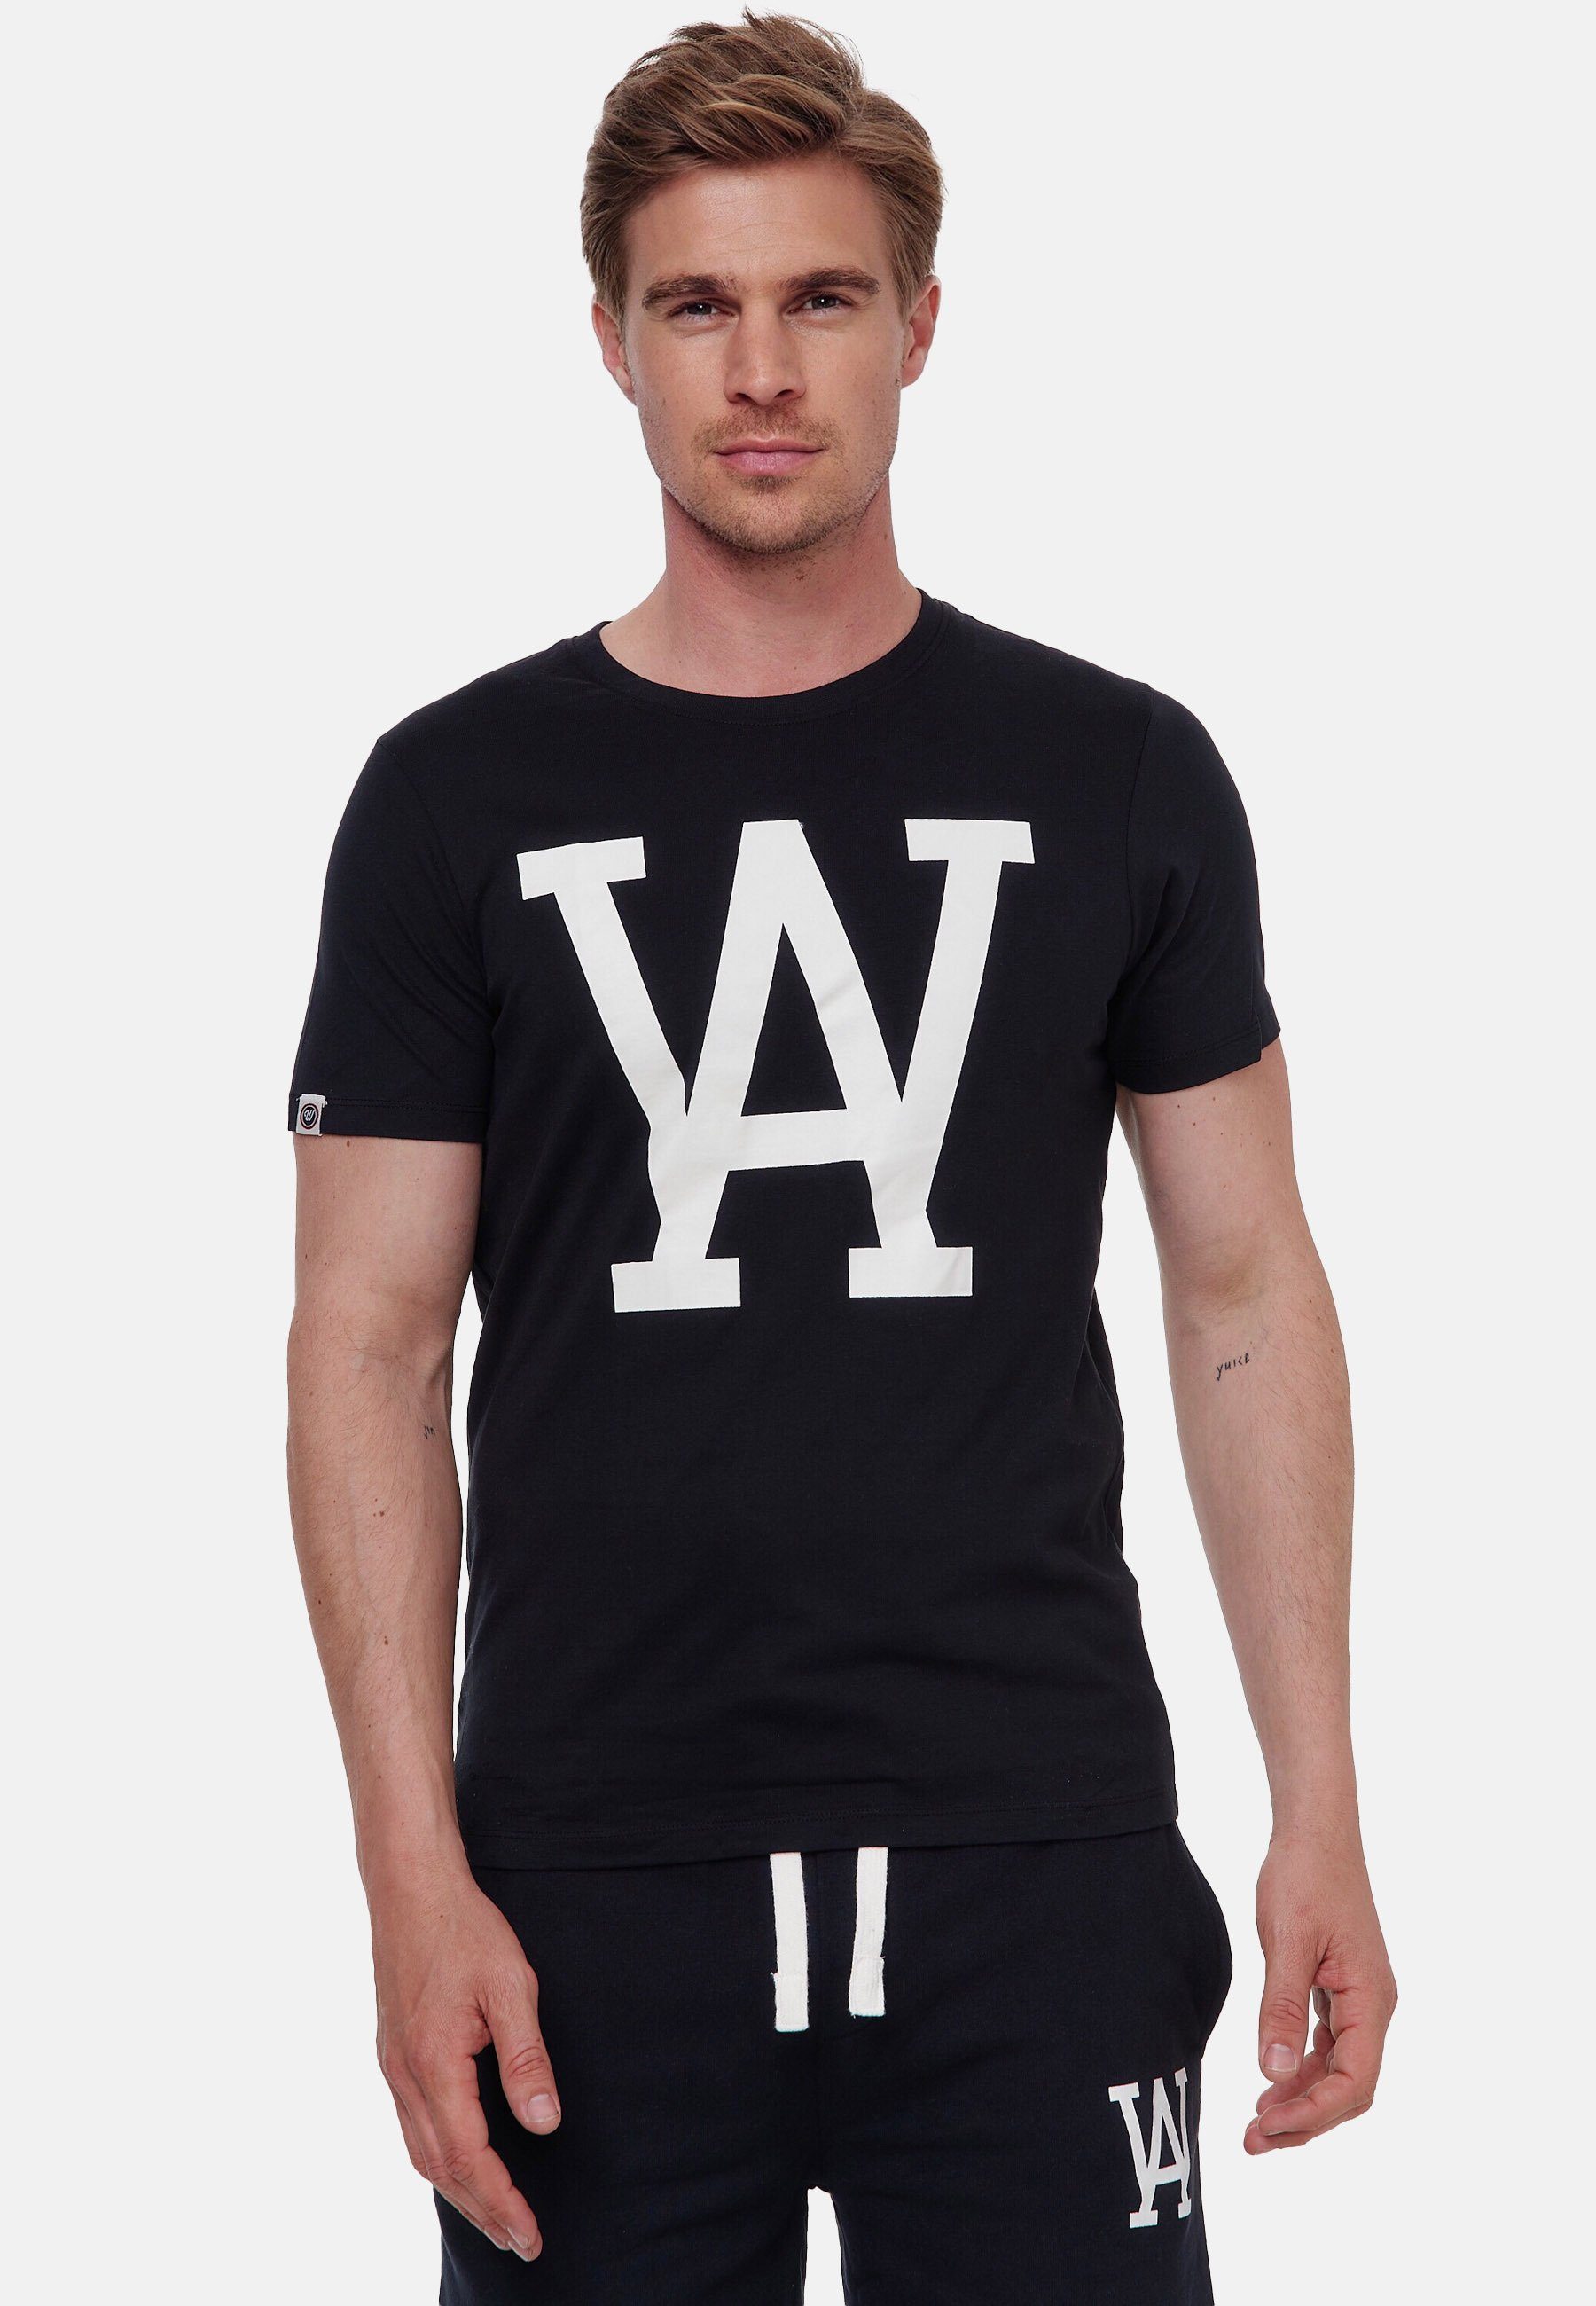 Woldo Athletic T-Shirt T-Shirt schwarz-weiß Big WA